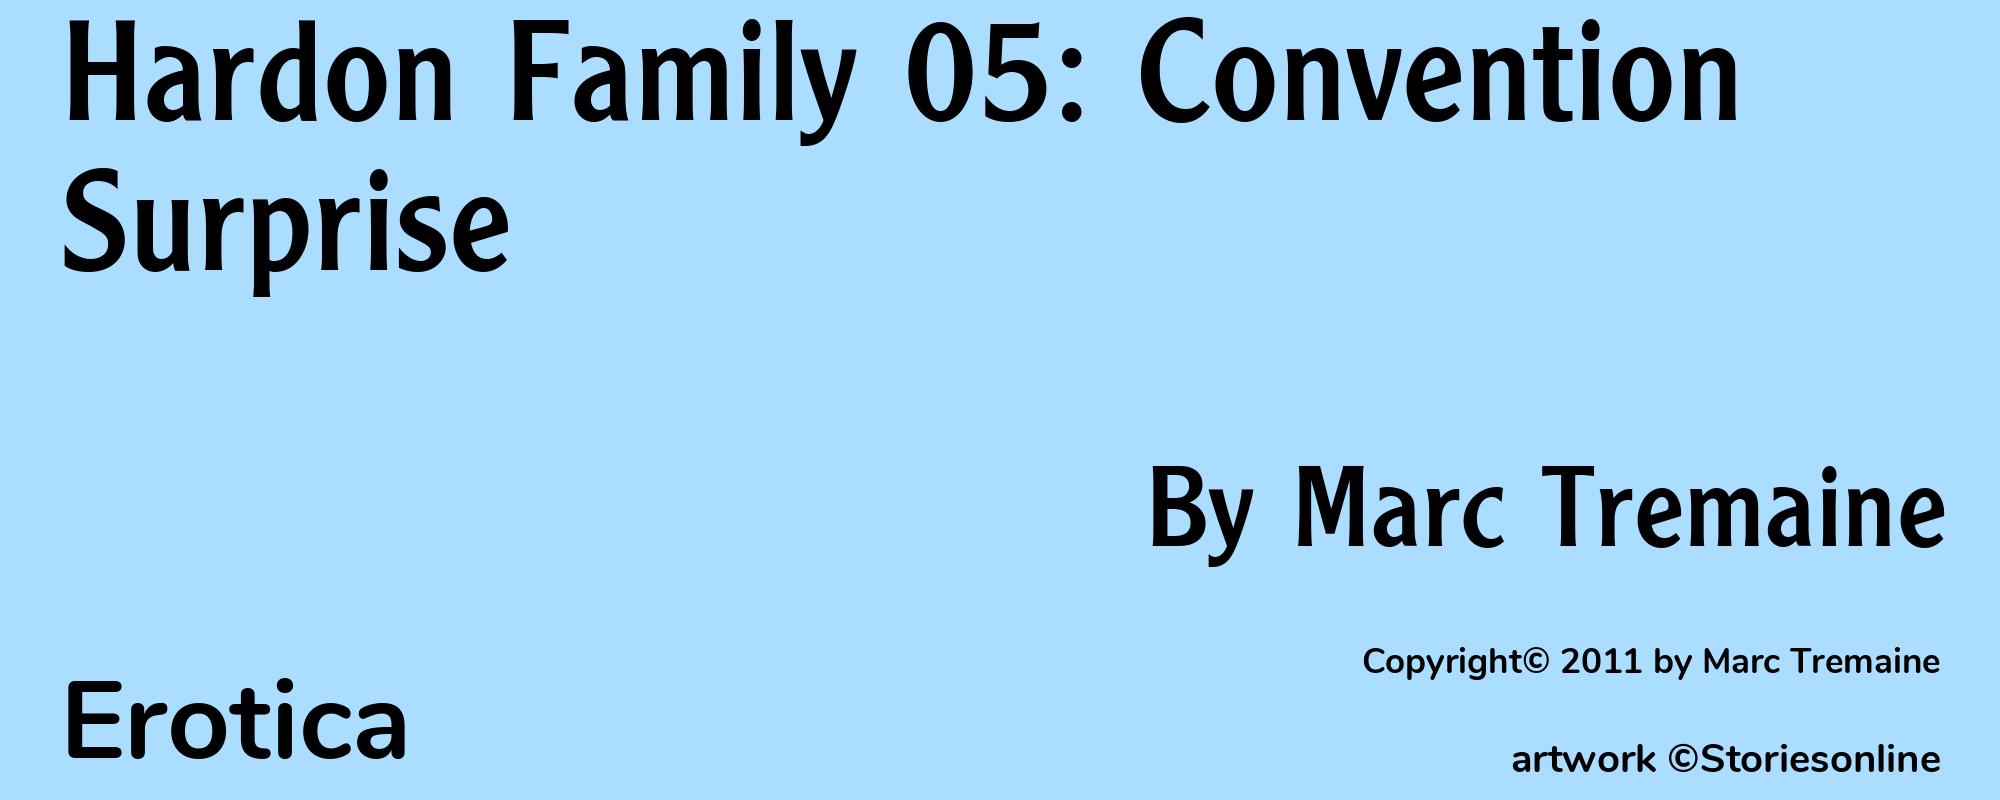 Hardon Family 05: Convention Surprise - Cover